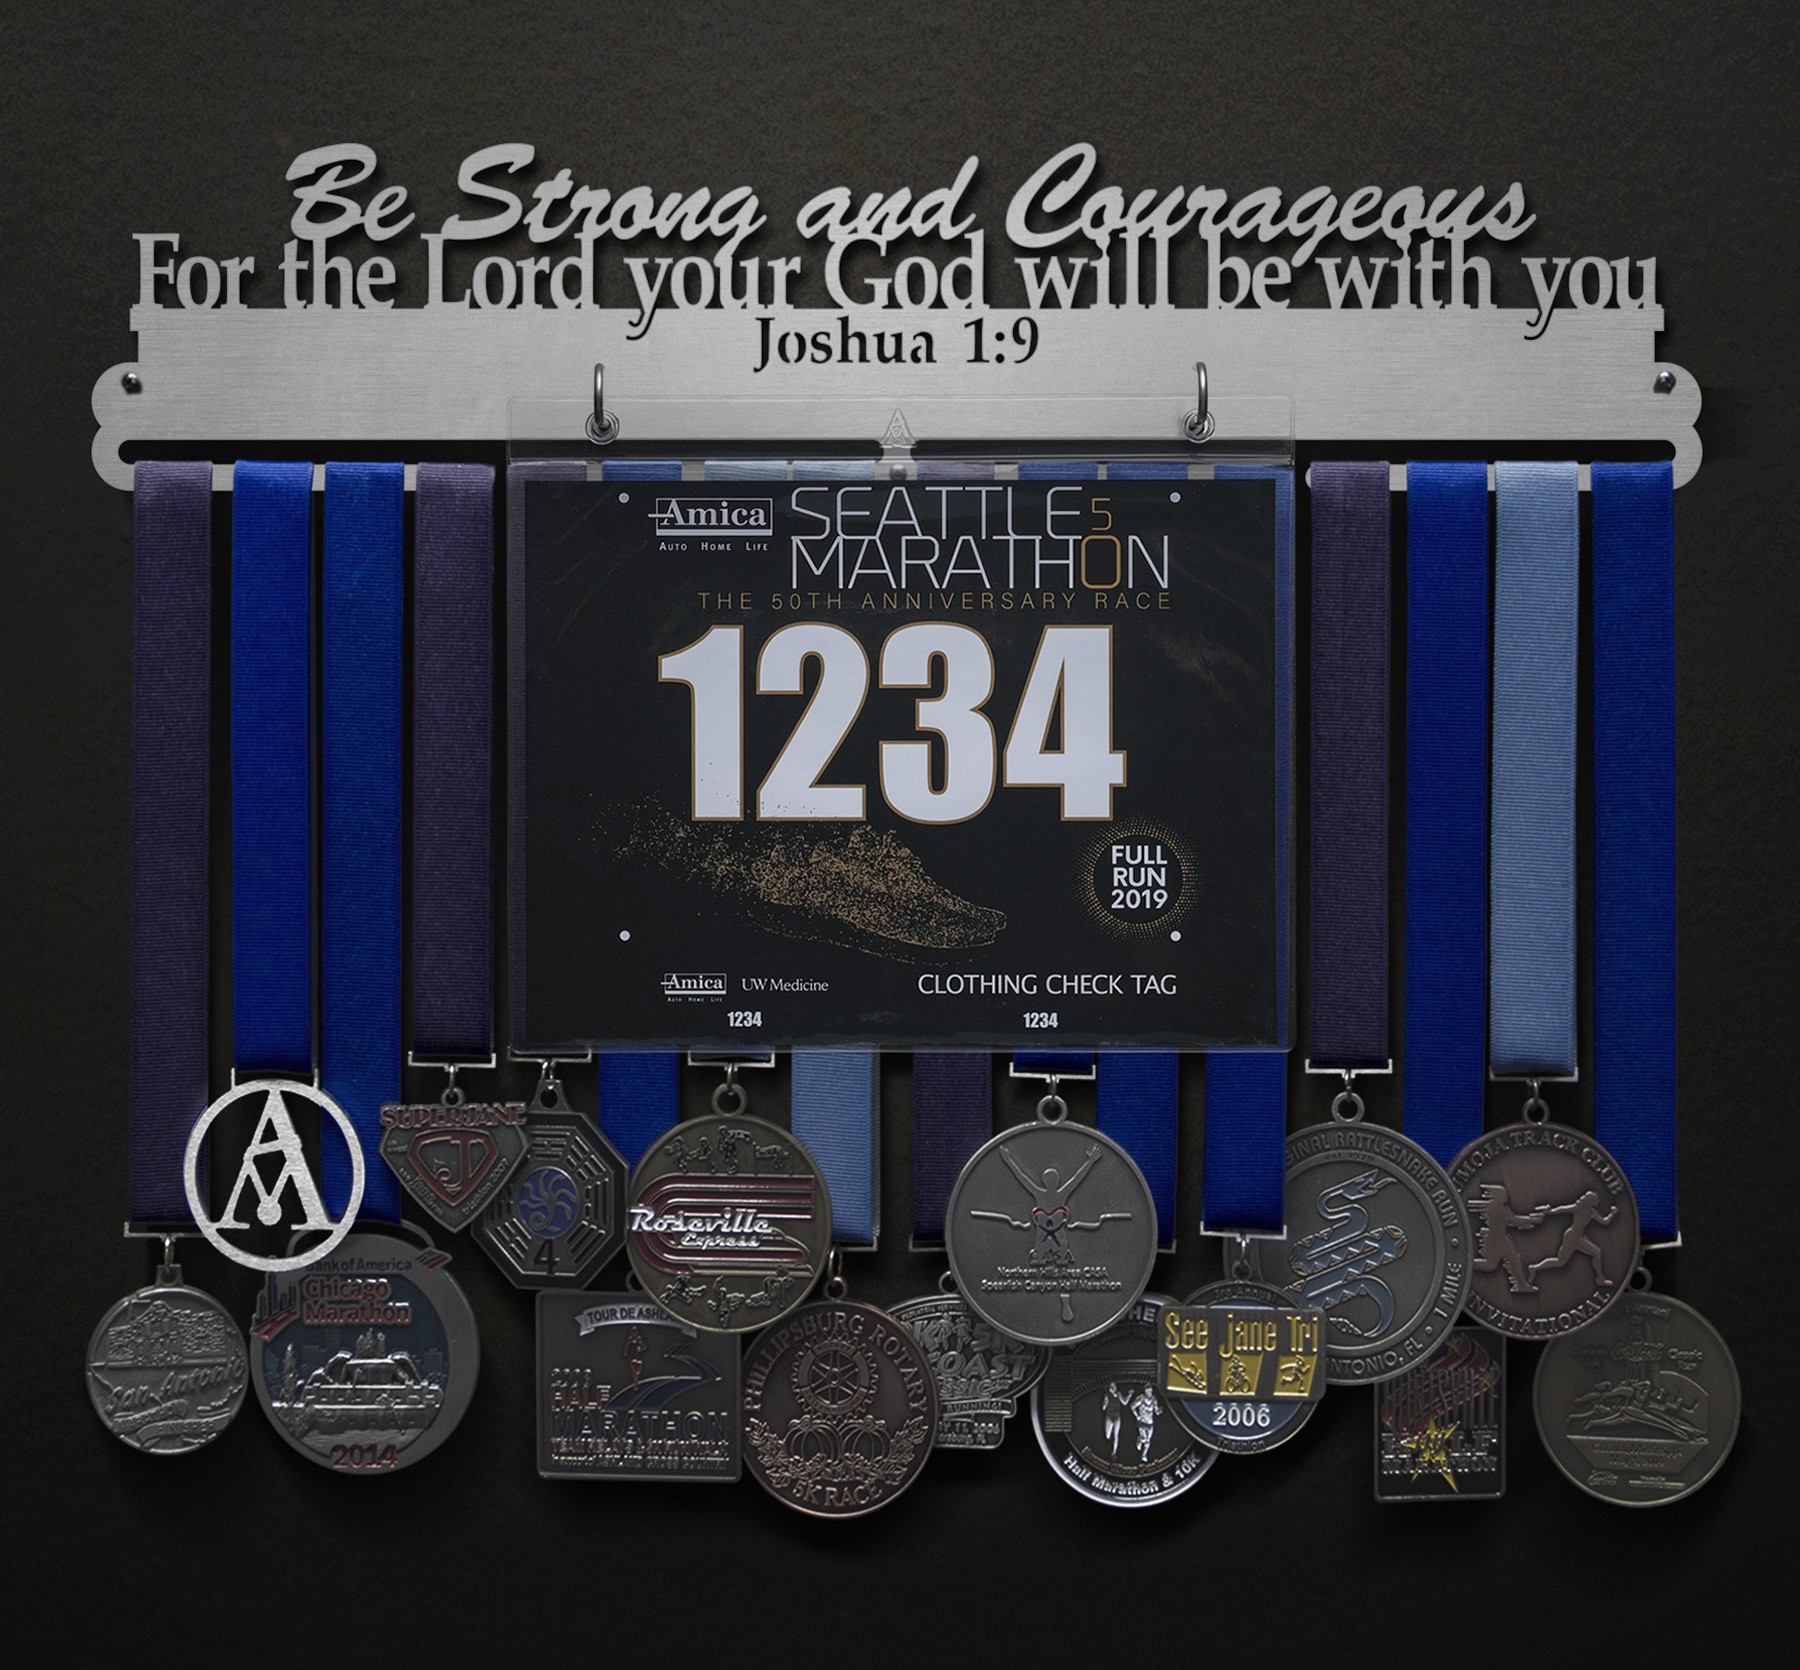 Joshua 1:9 Bib and Medal Display